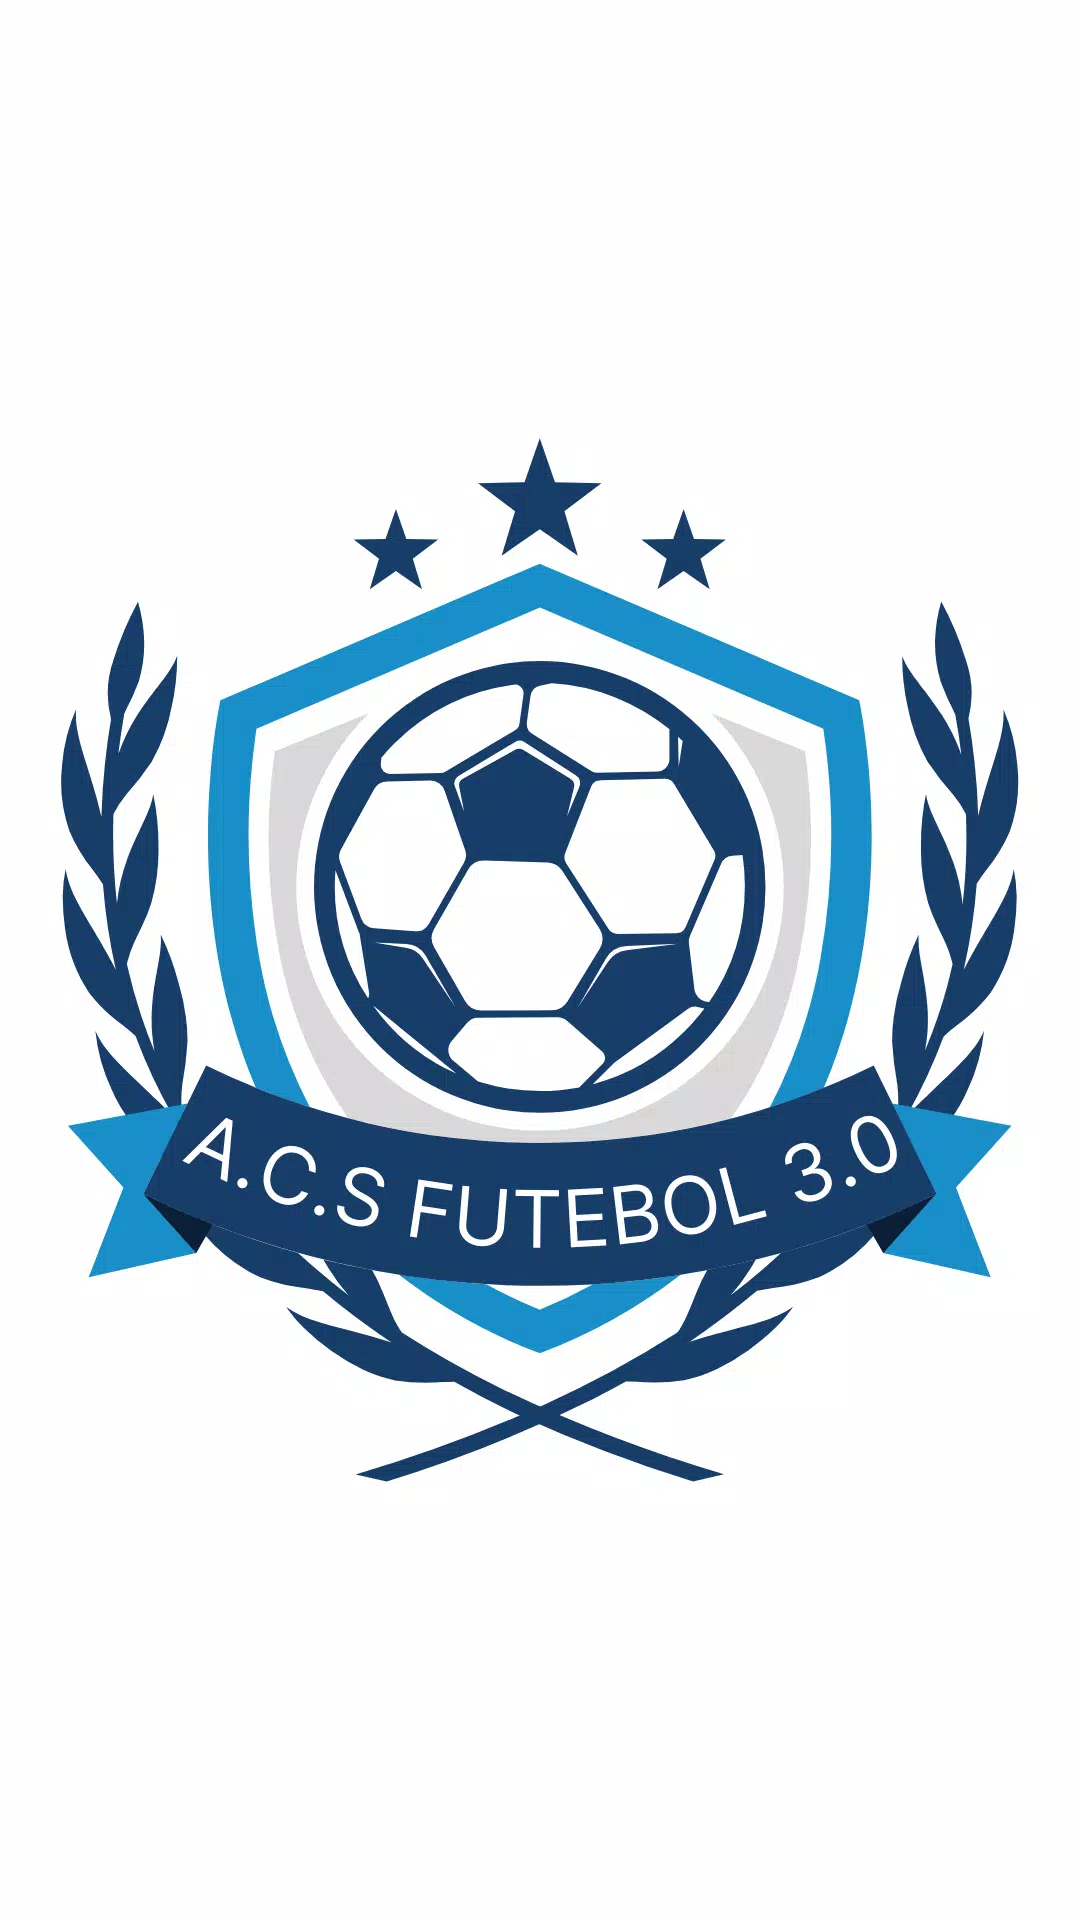 Futebol Da Hora Ao Vivo APK pour Android Télécharger